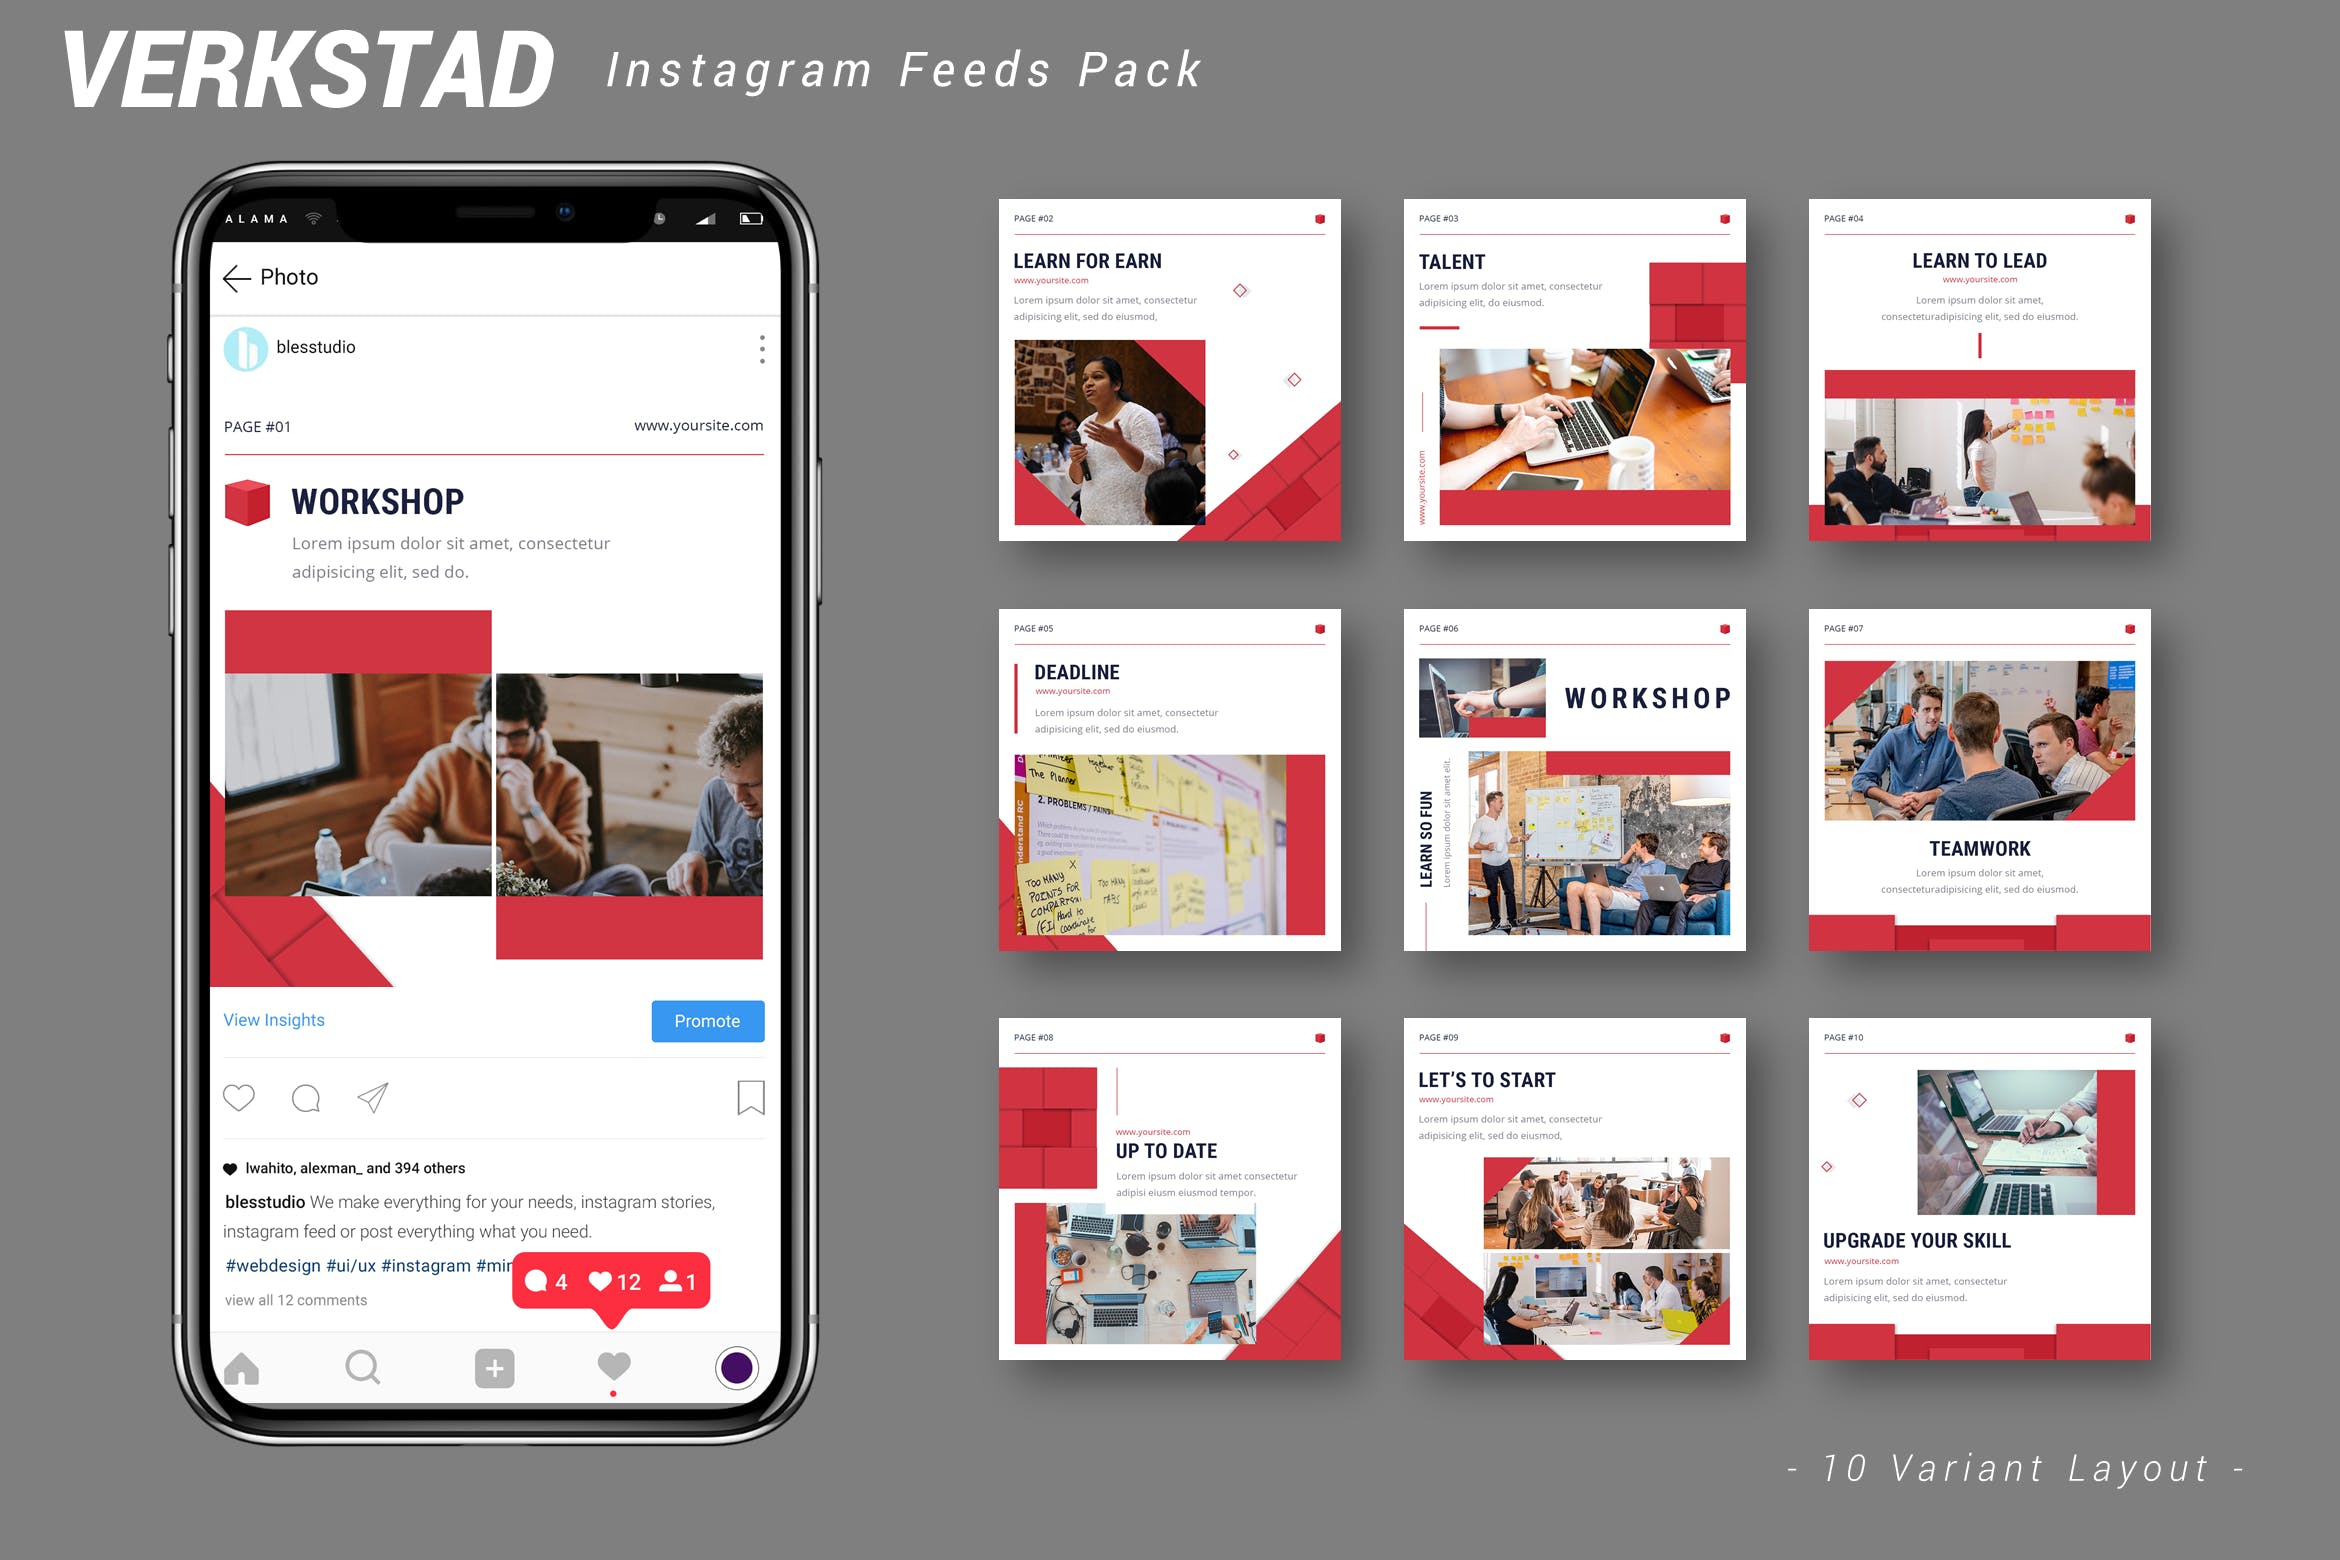 Instagram社交信息流/贴文配图设计模板第一素材精选 Verkstad – Instagram Feeds Pack插图